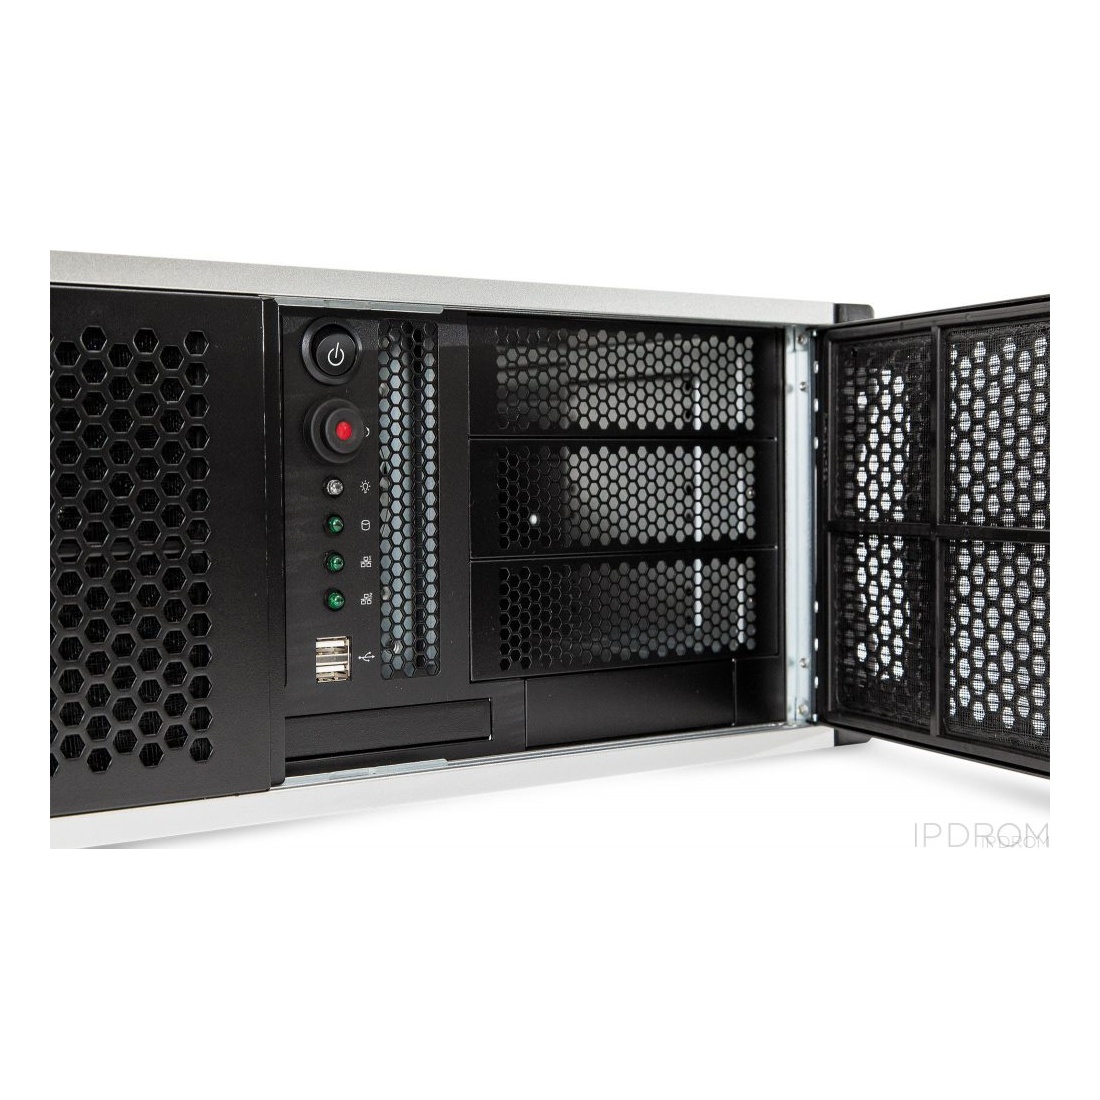 Сервер IPDROM Pro (P-8-РД-Б-12/БР-2Э) 2022